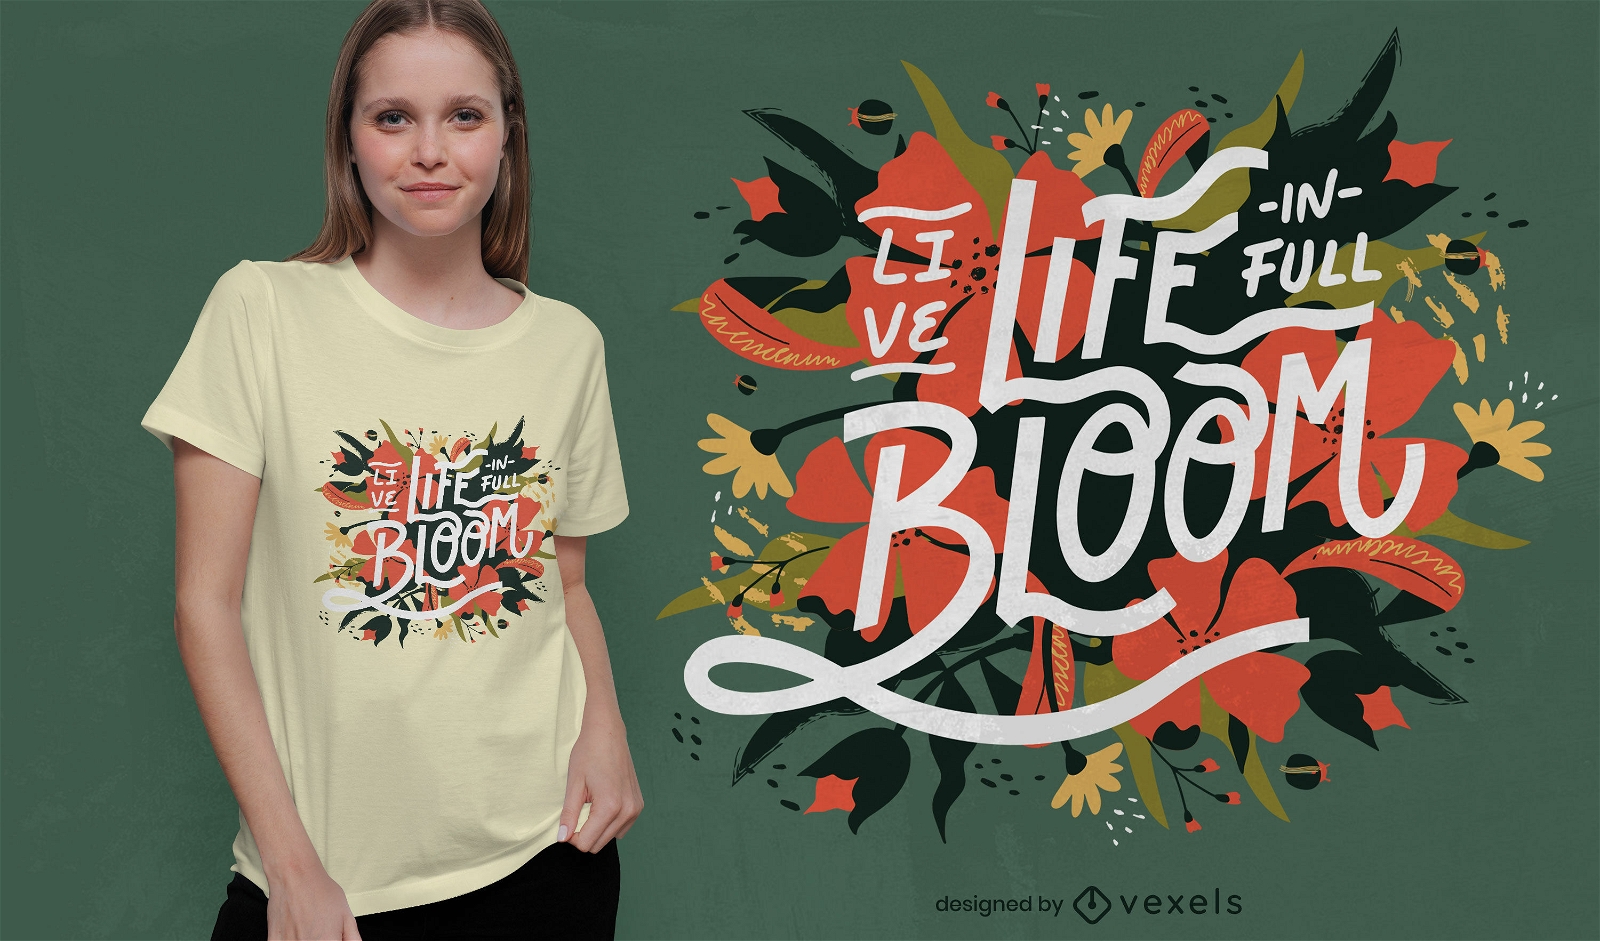 Bloom quote t-shirt design